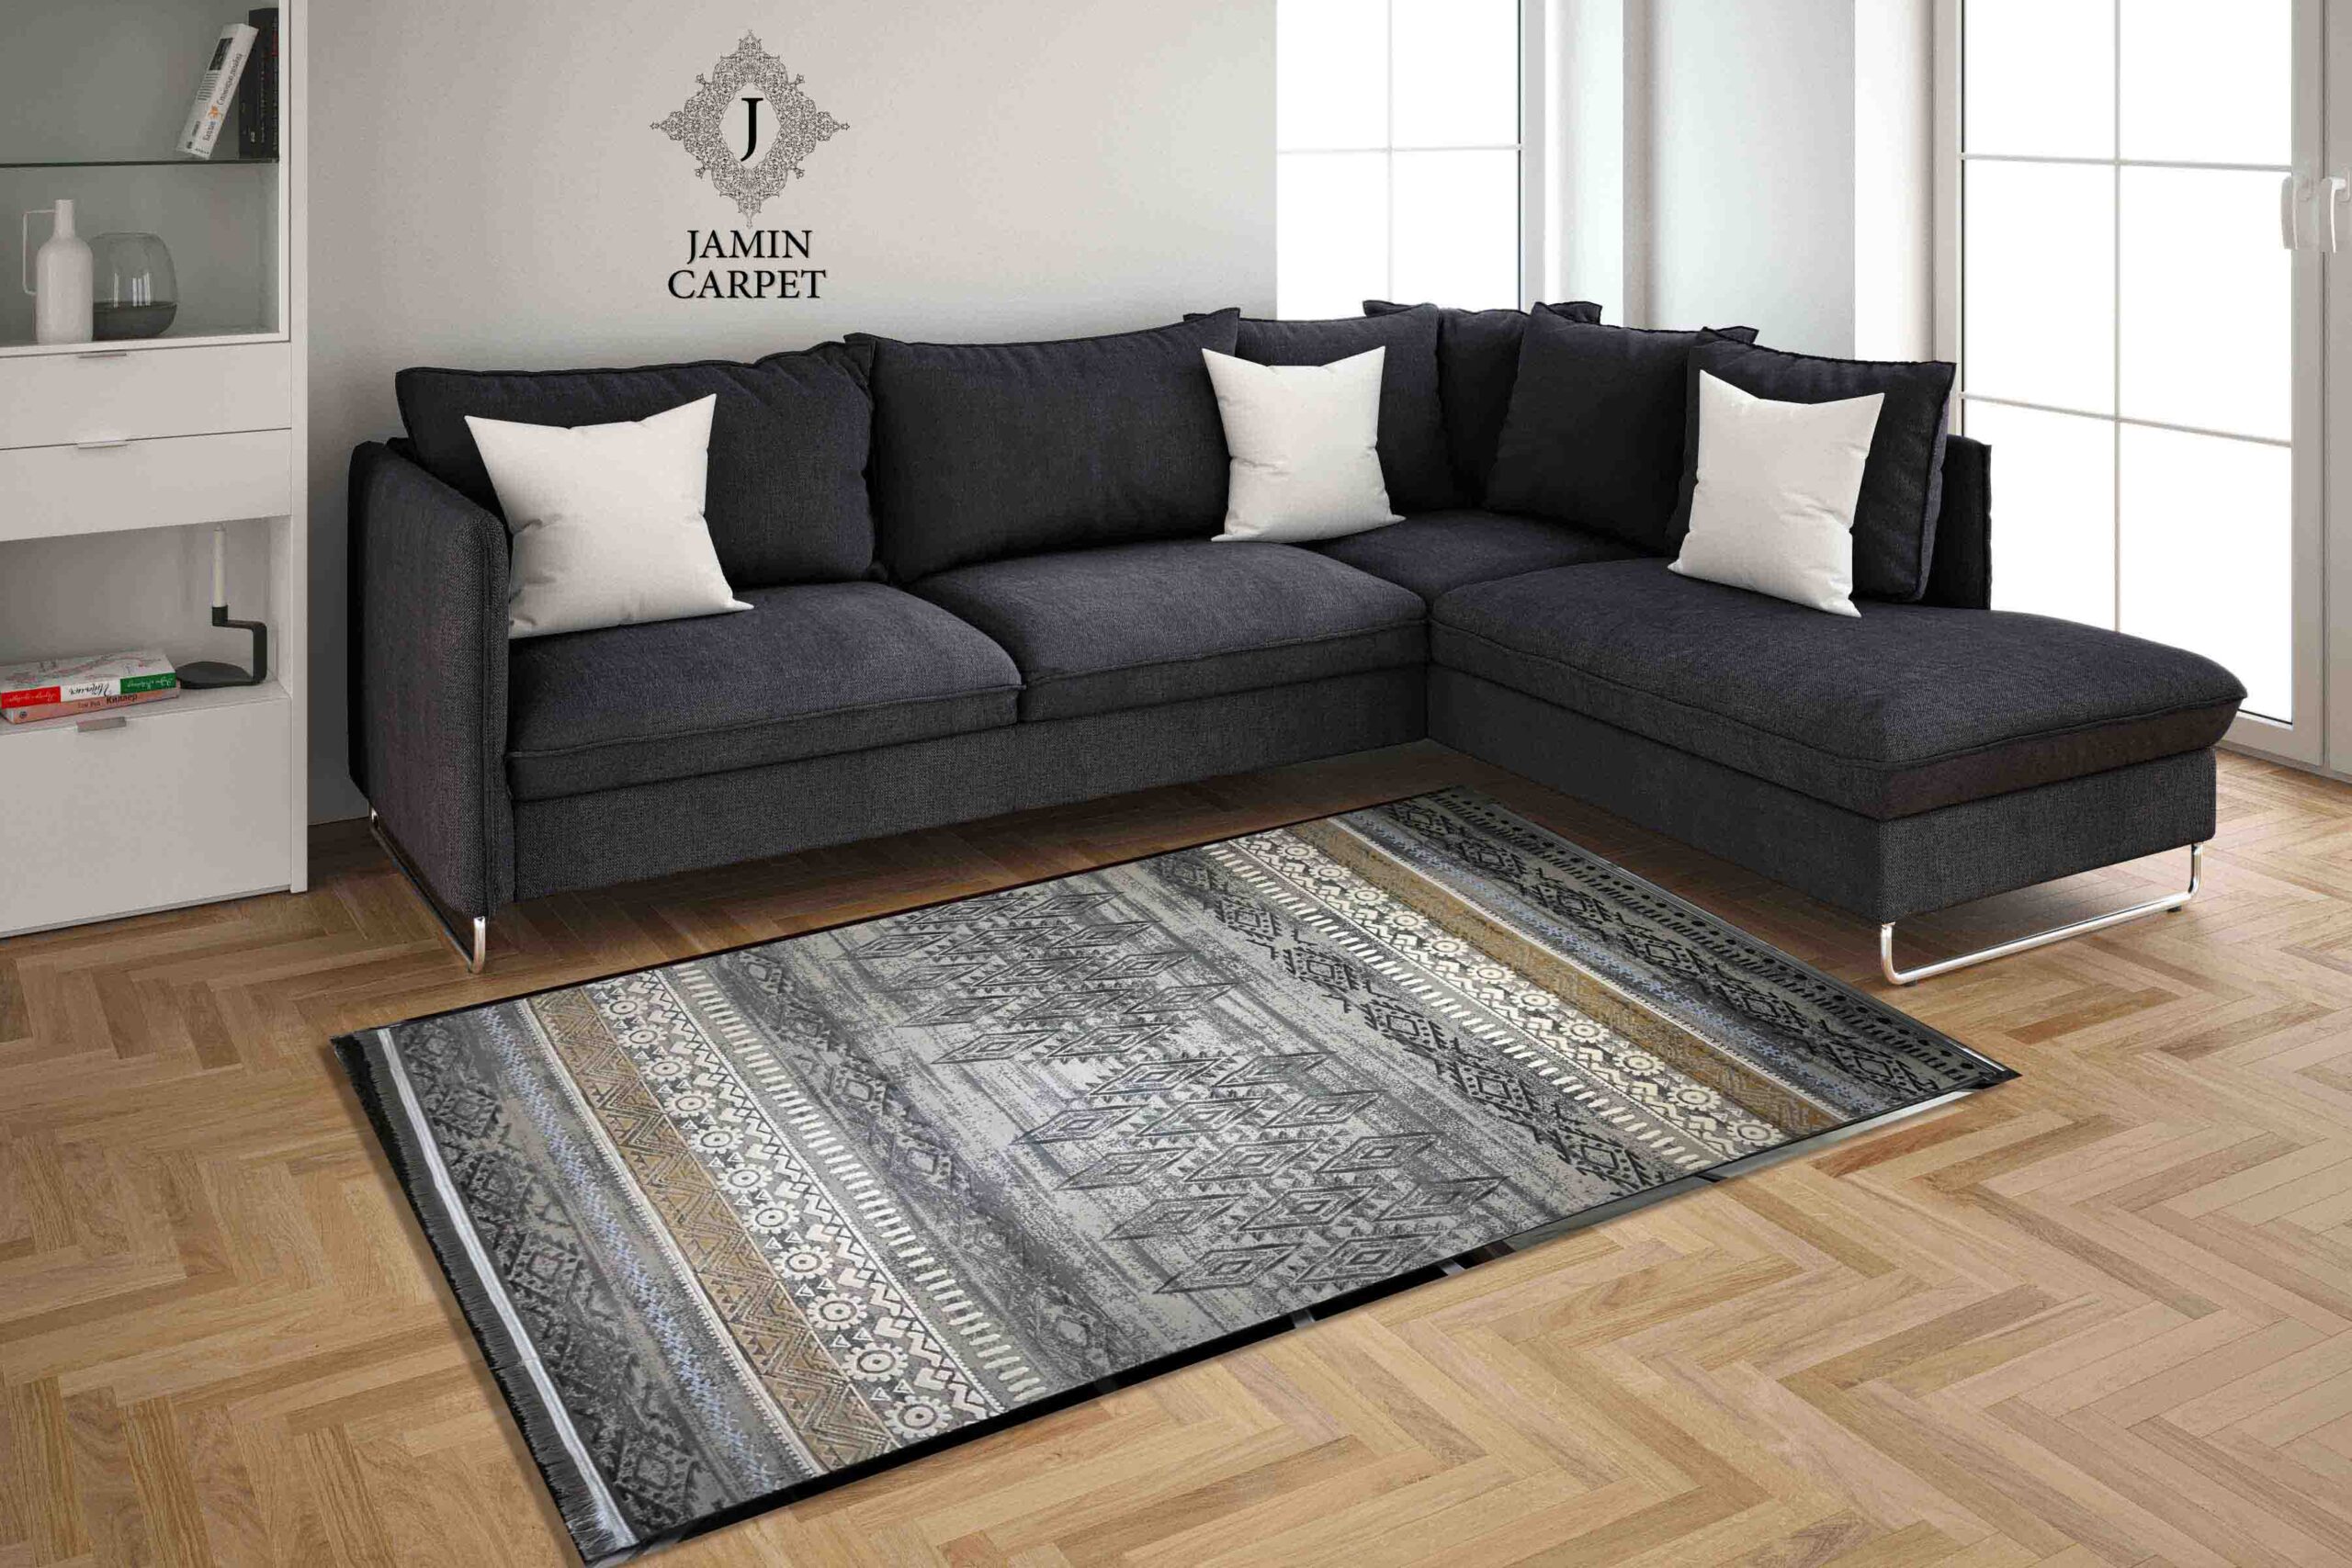 Fantasy carpet code 208 comb 400 density 1800 all acrylic